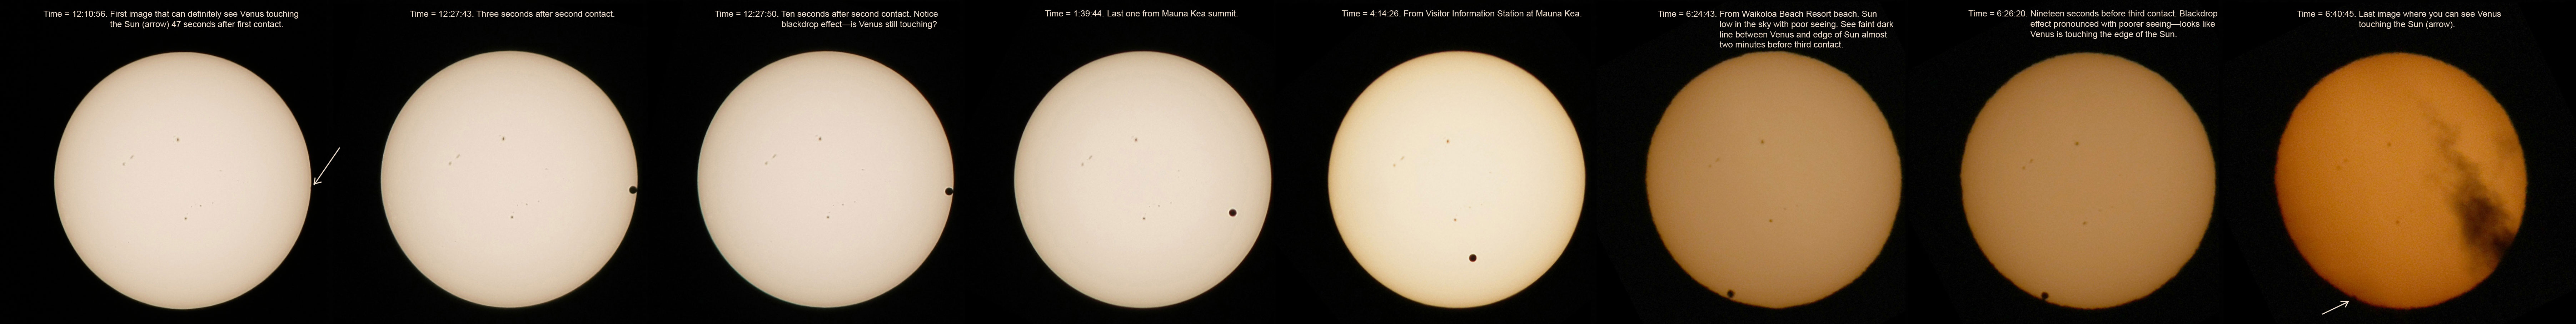 Venus Transit of Sun on June 5, 2012 as seen from Hawaii